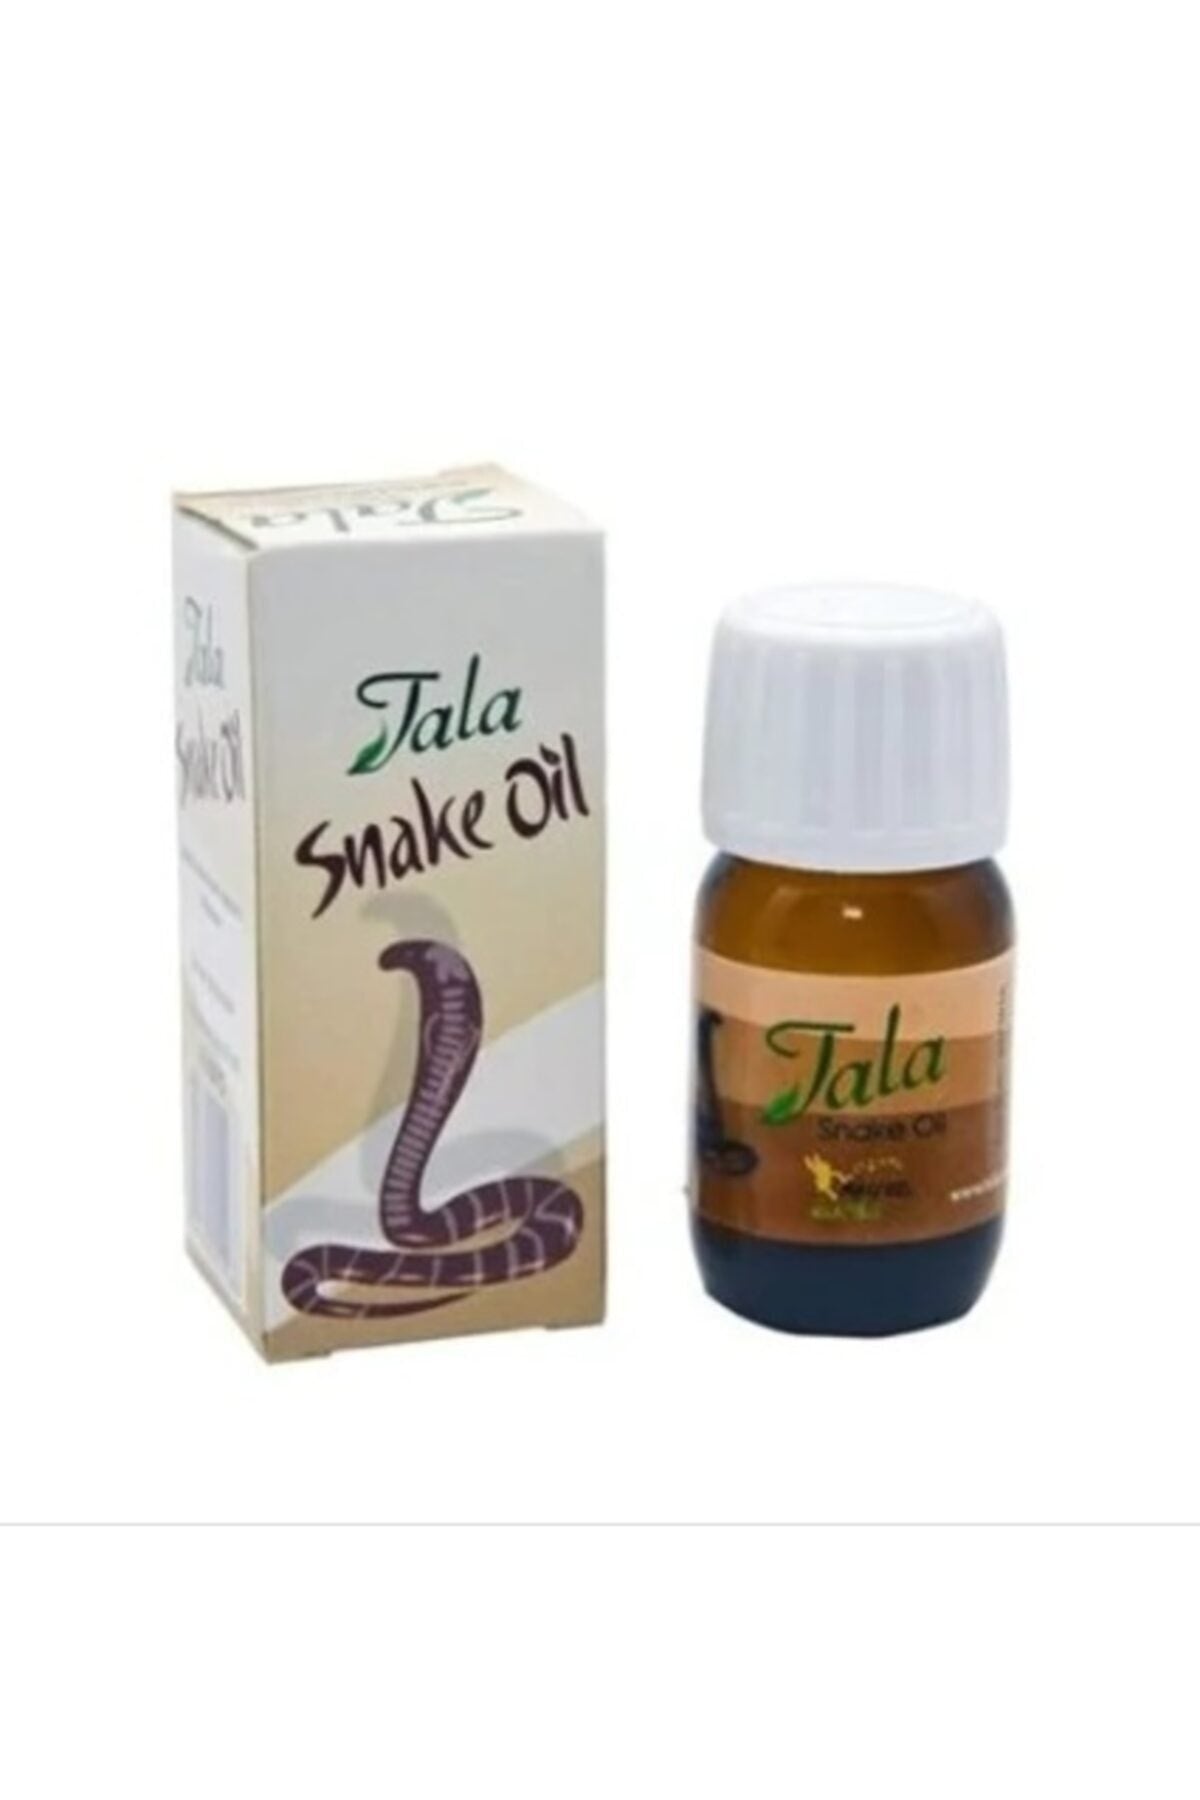 snake-oil-tala